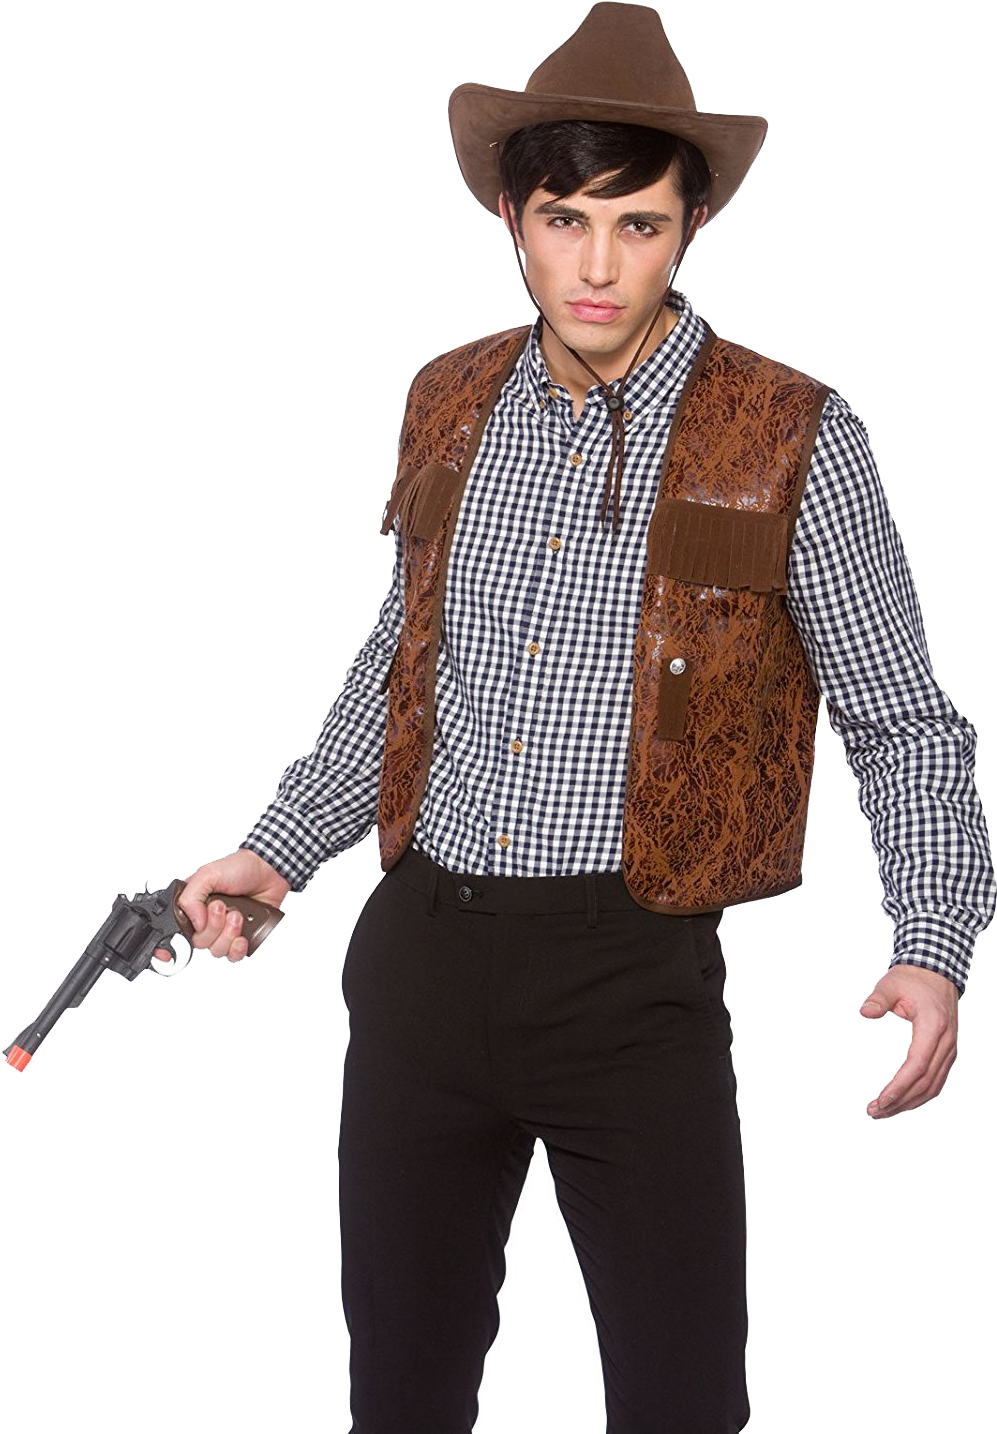 A Man In A Garment Holding A Gun